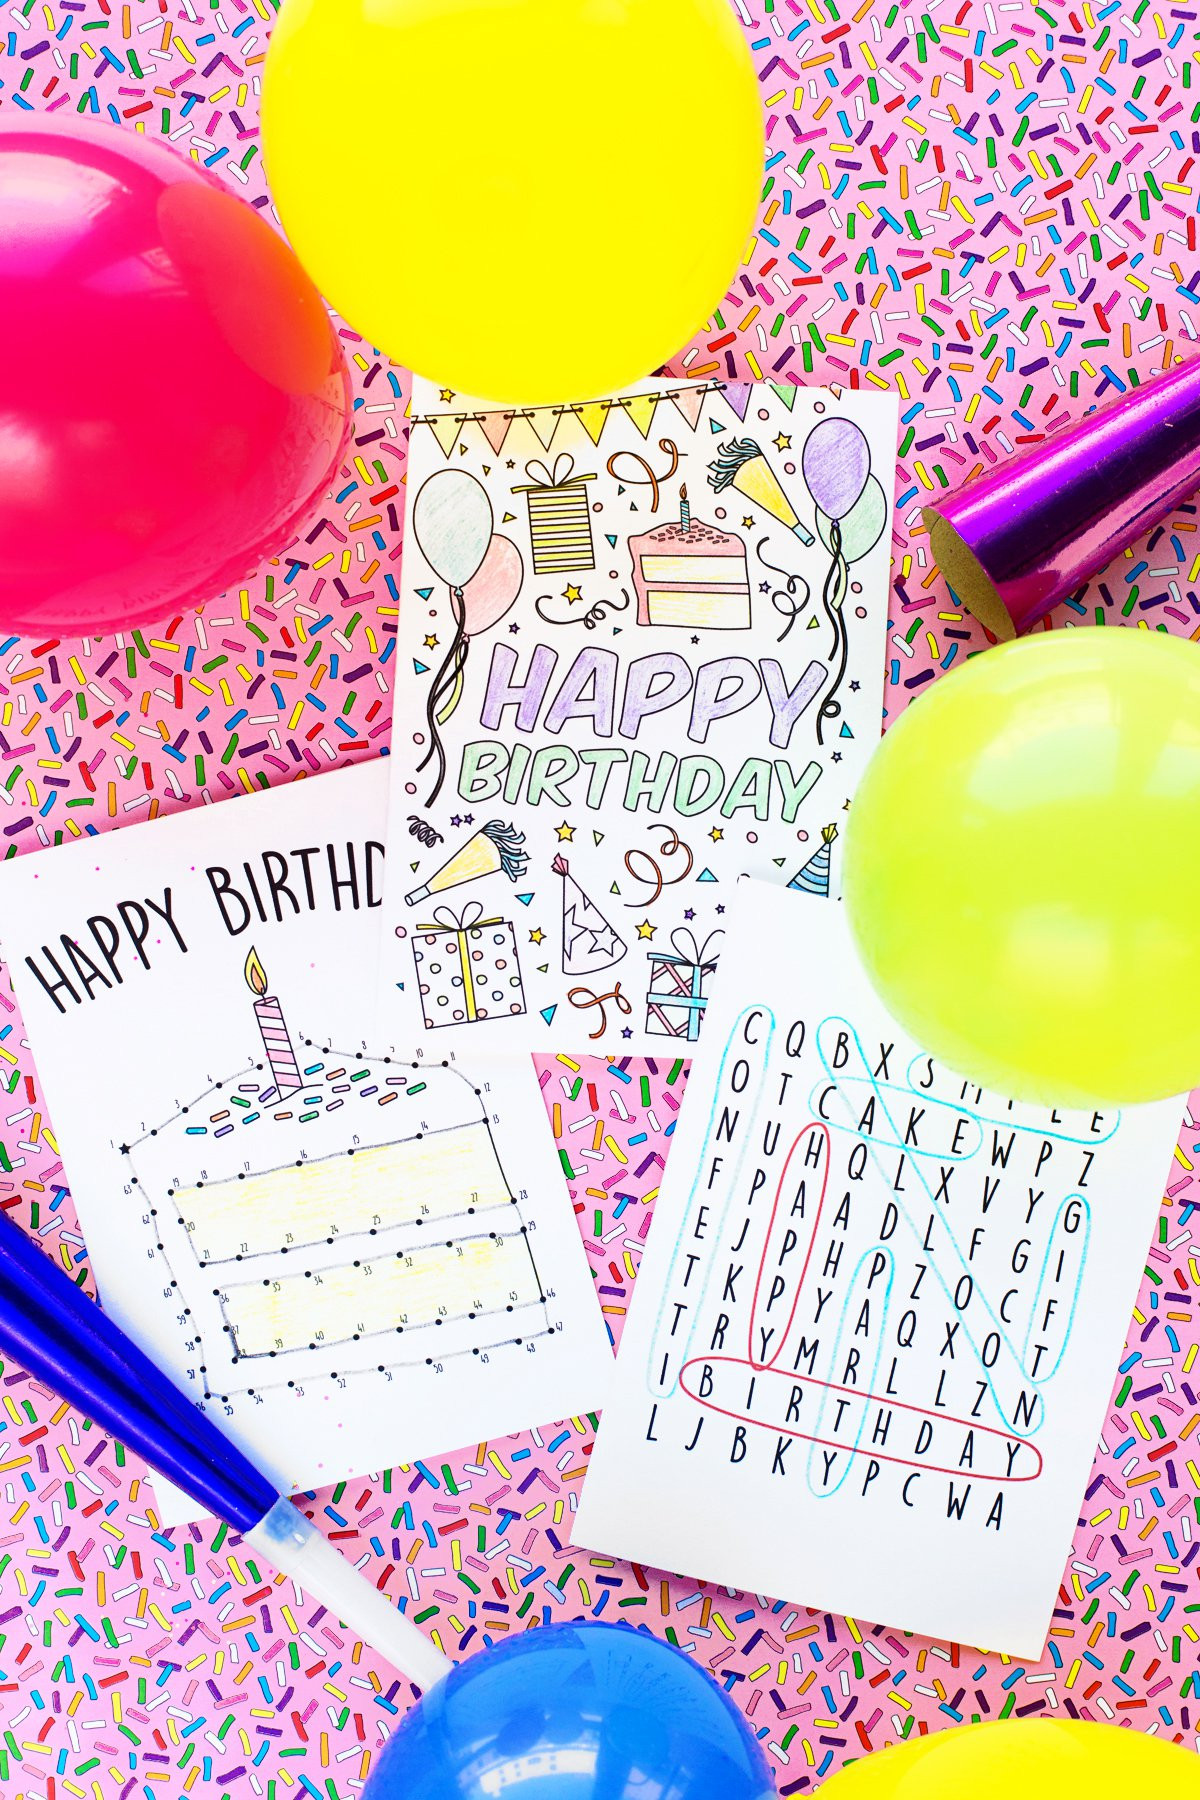 Best ideas about Free Birthday Card Printable
. Save or Pin Free Printable Birthday Cards for Kids Studio DIY Now.